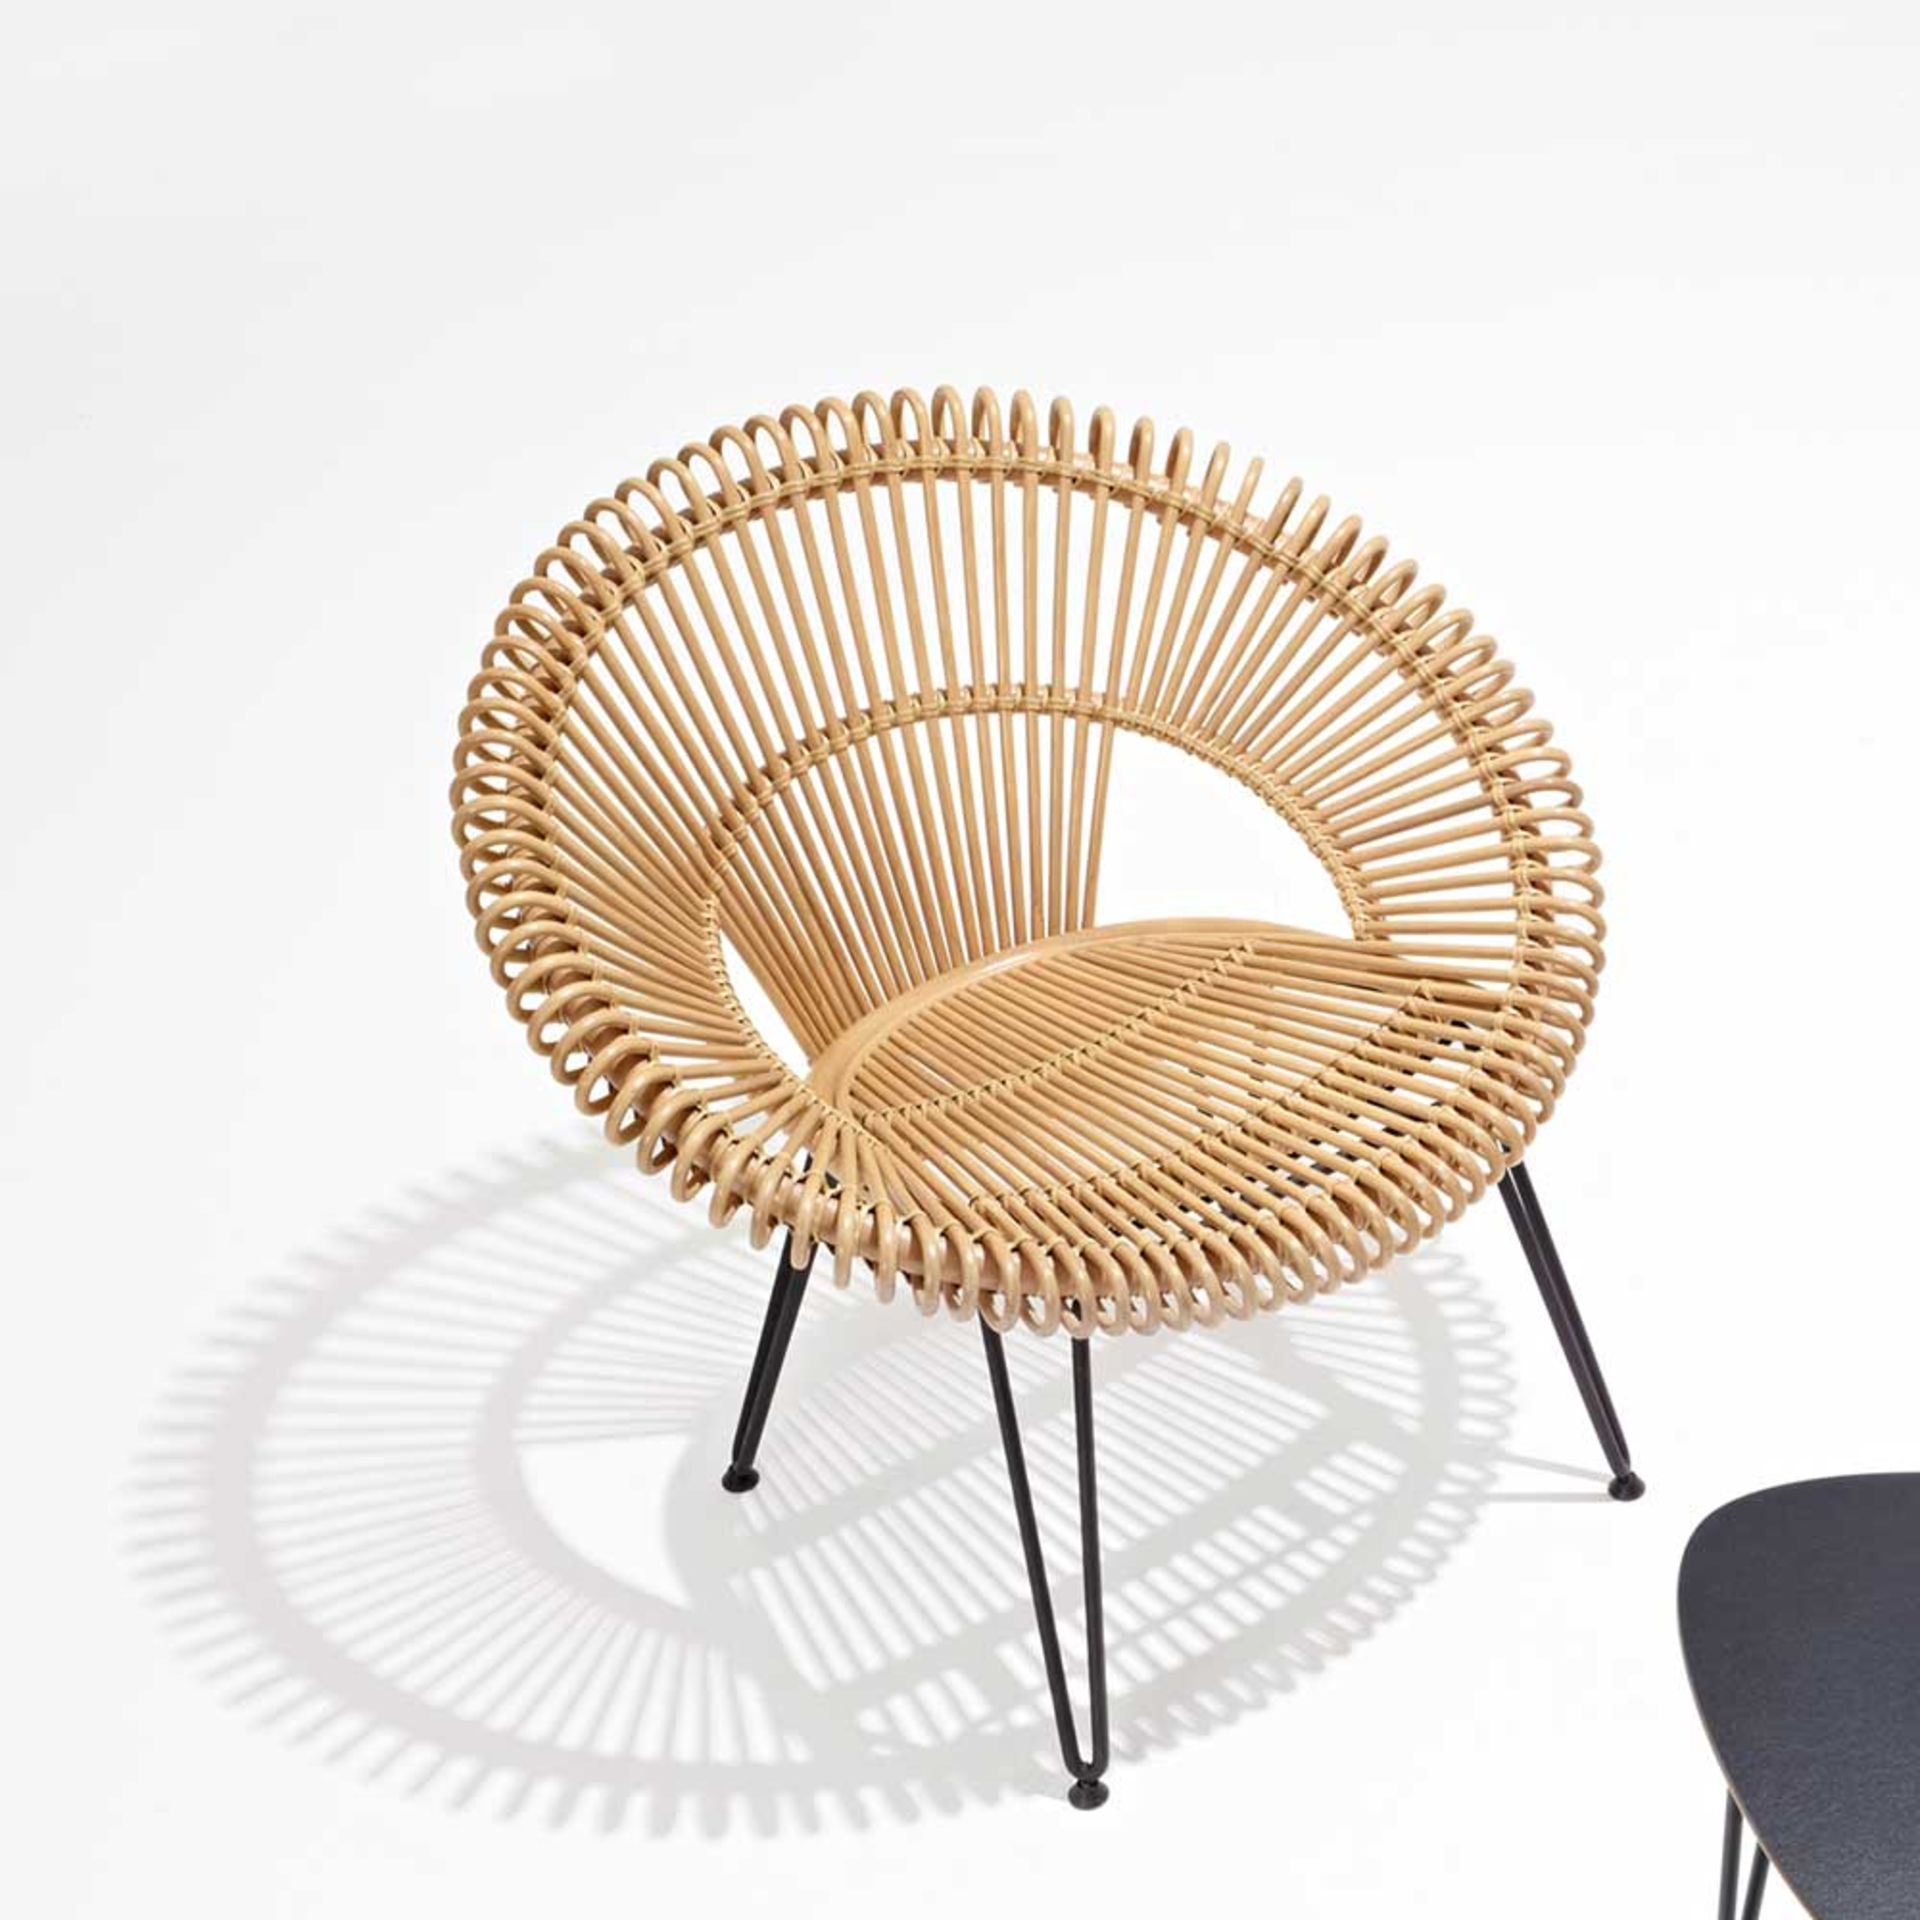 1 x Cruz Lazy Chair By Vincent Shepherd - Natural Rattan - For Contemporary Interiors - RRP £375! - Bild 2 aus 4